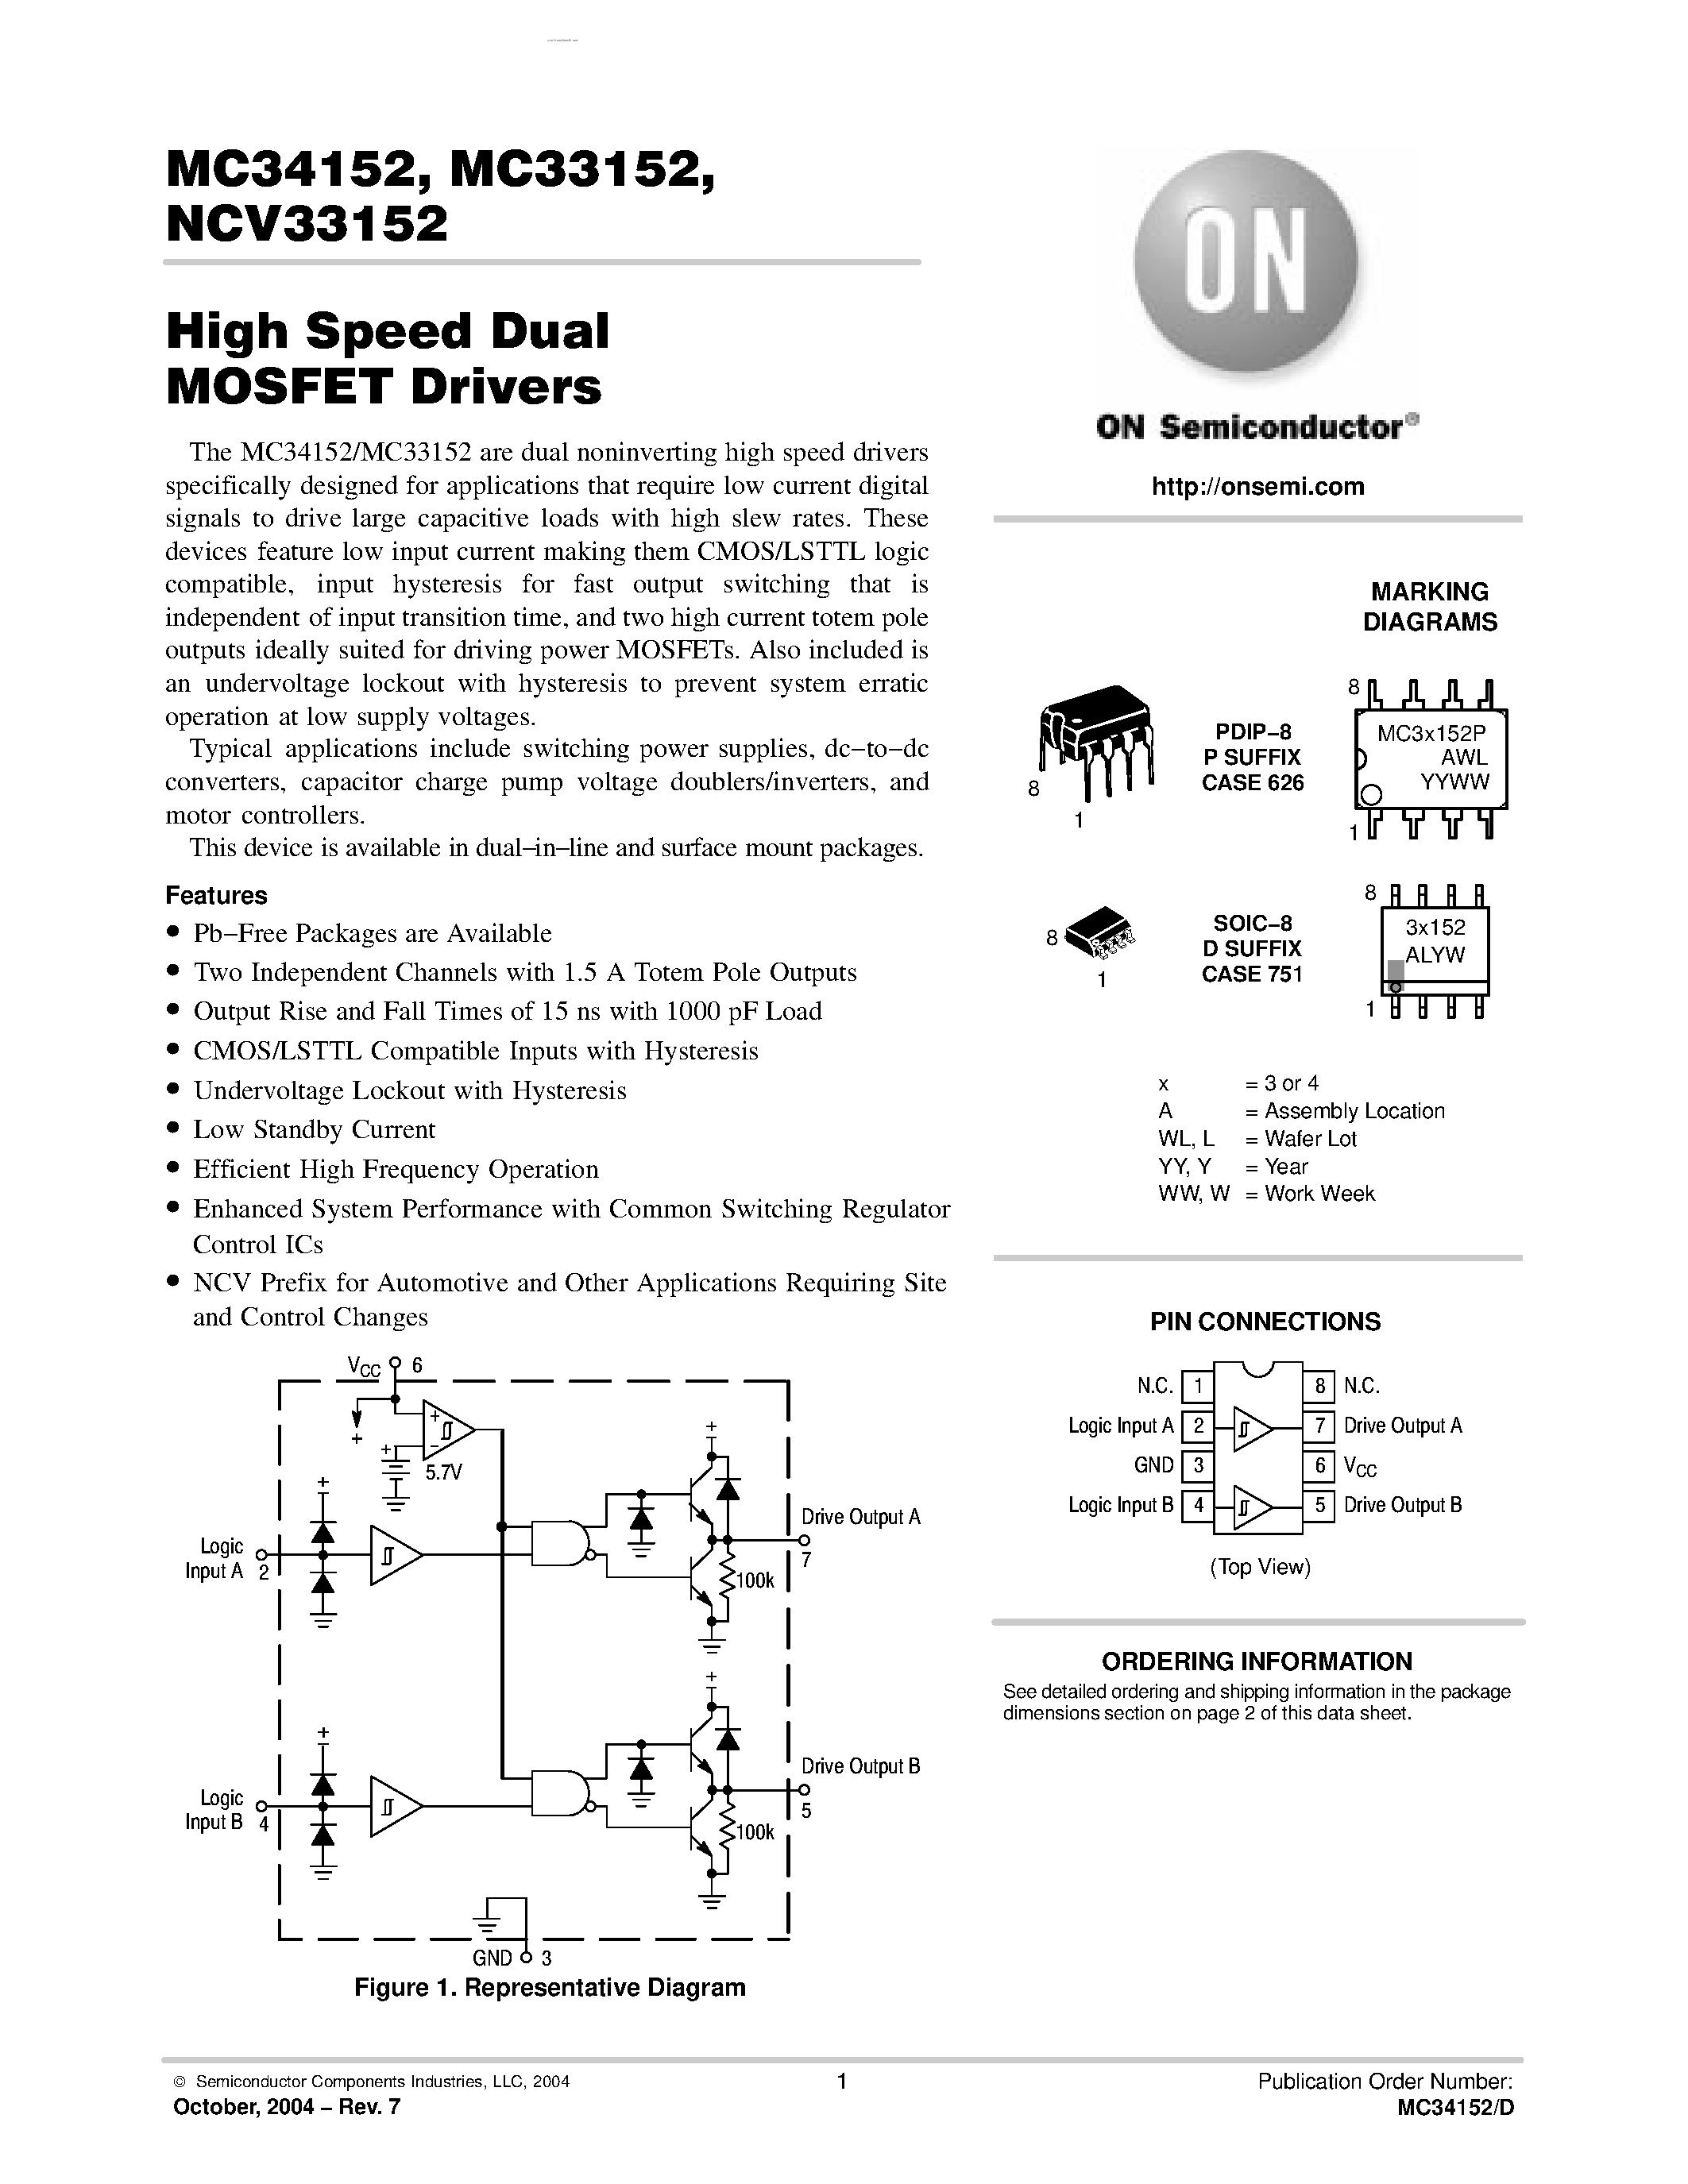 Datasheet MC33152 - (MC33152 / MC34152) HIGH SPEED DUAL MOSFET DRIVERS page 1